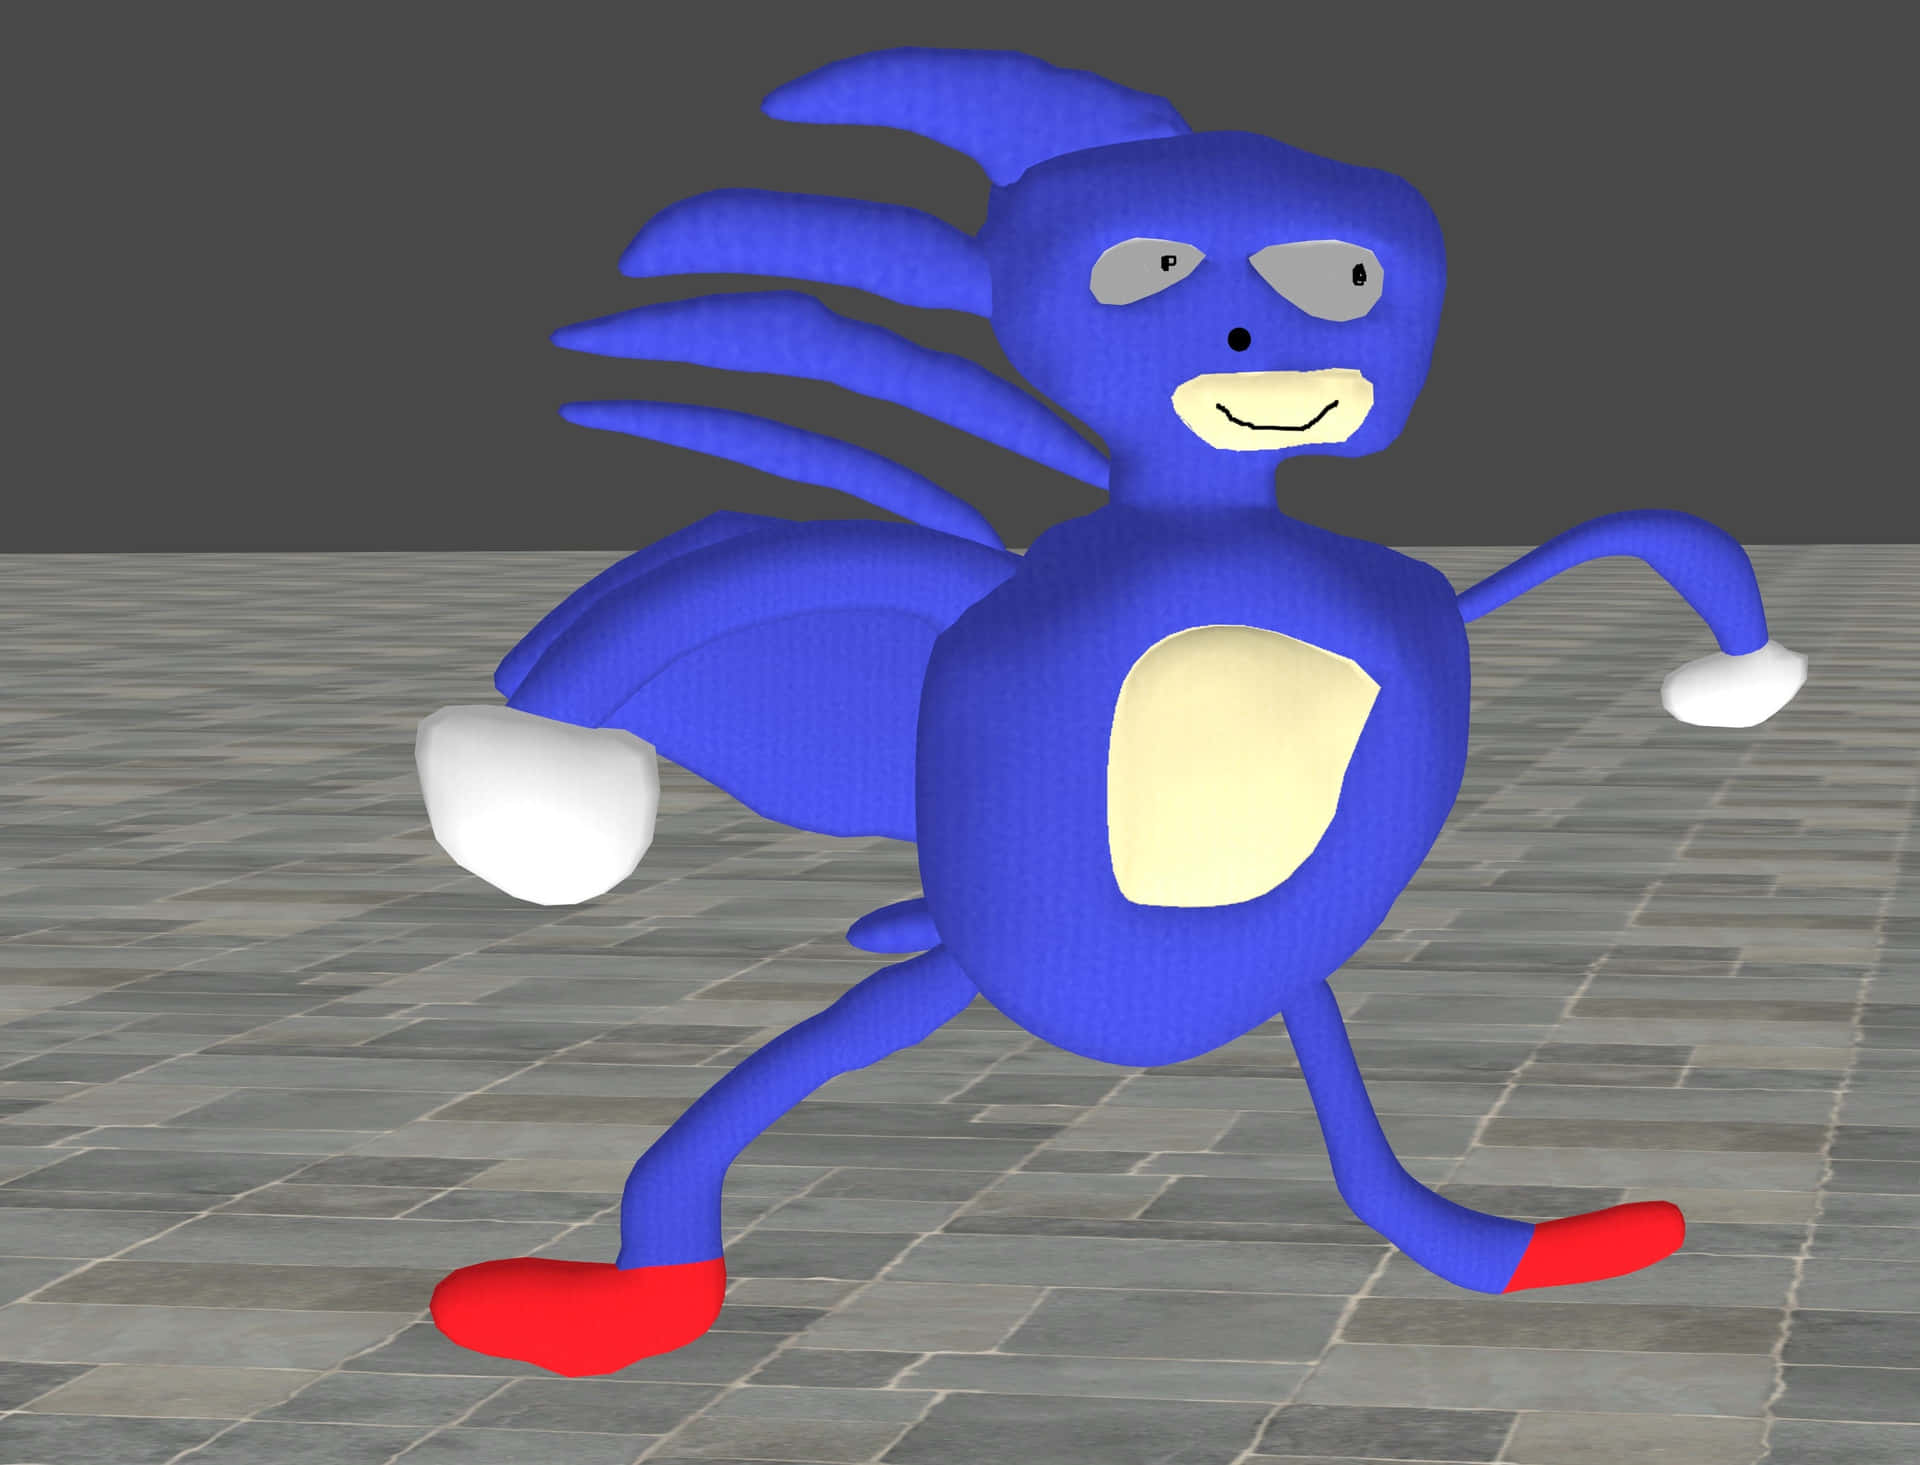 Sanic, The Fun Reinterpretation Of The Classic Game Character Sonic The Hedgehog